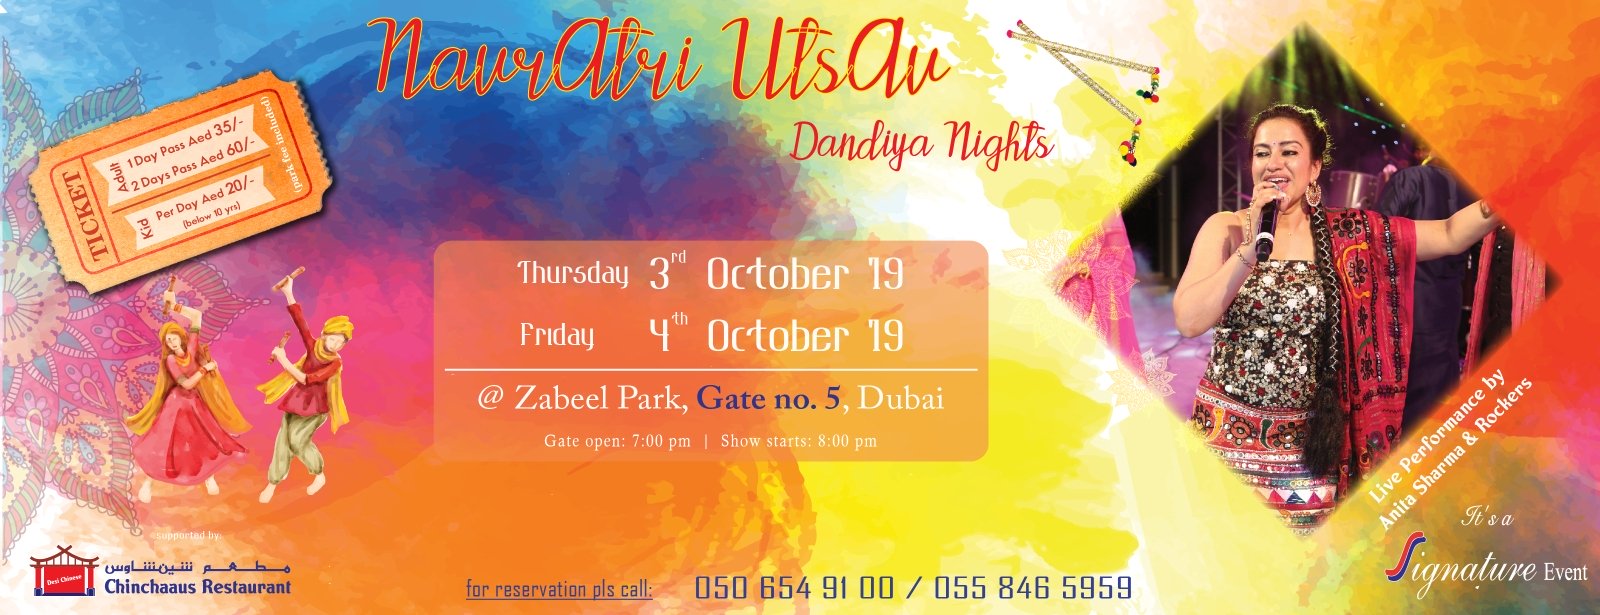 Navratri Utsav Dandiya Nights with Anita Sharma - Coming Soon in UAE